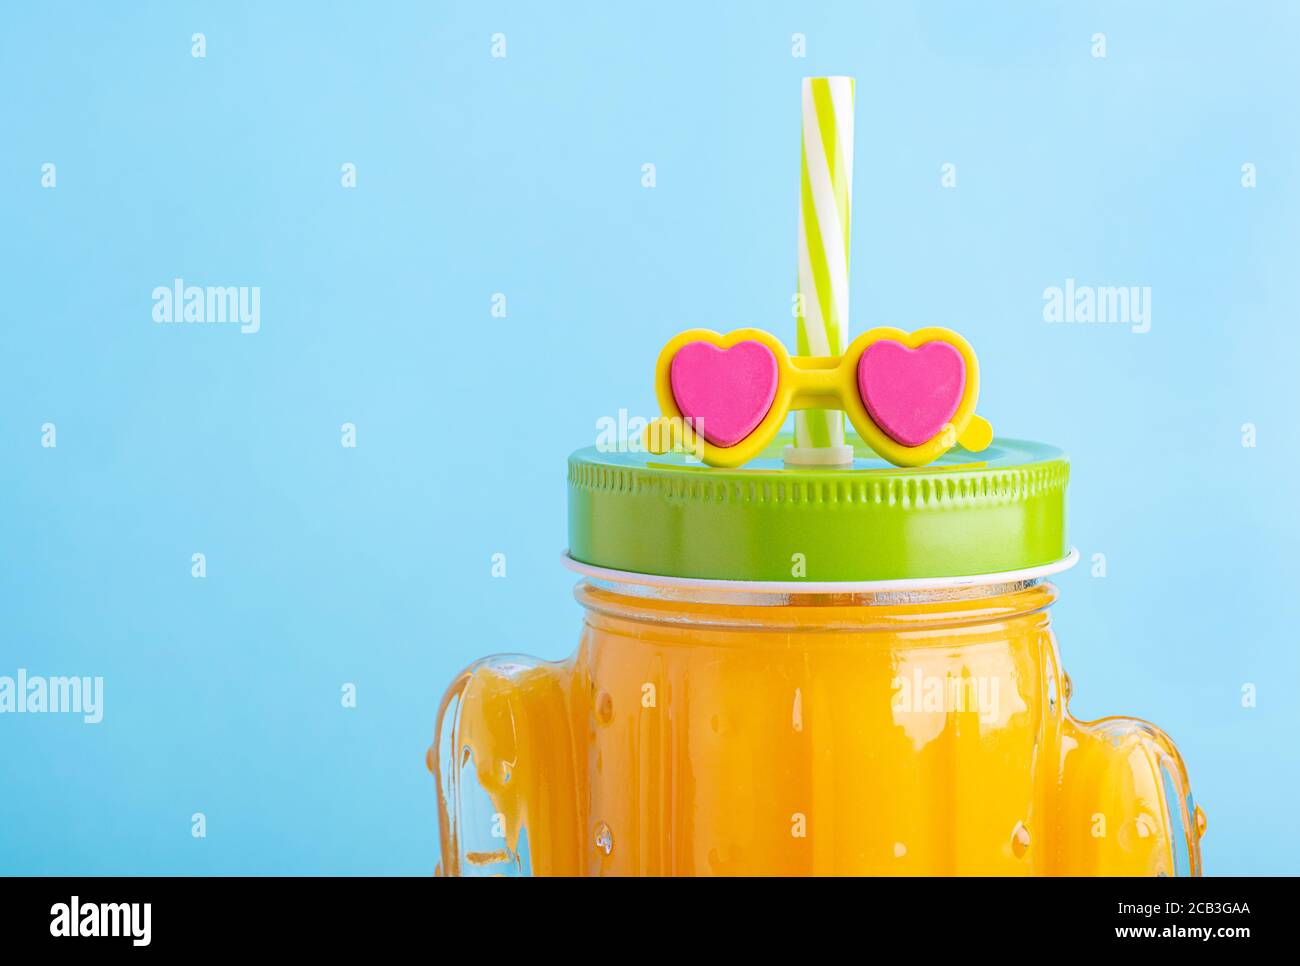 https://c8.alamy.com/comp/2CB3GAA/cactus-shape-mason-jar-with-orange-juice-a-jar-with-green-lid-and-straw-with-sunglasses-2CB3GAA.jpg